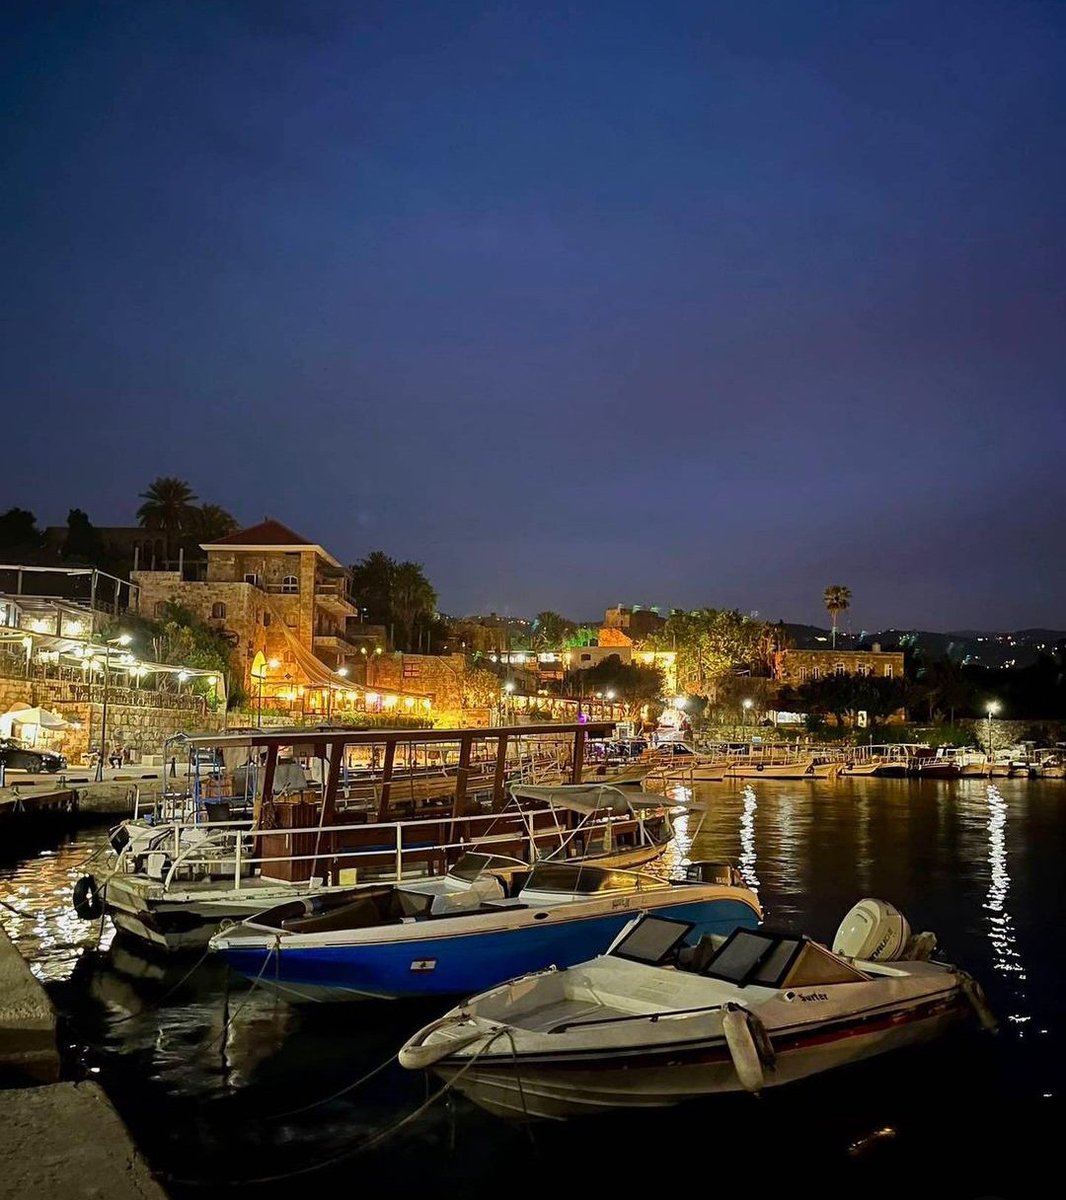 Night 🌙 
#Lebanon #nightphotography #Sea #BOAT